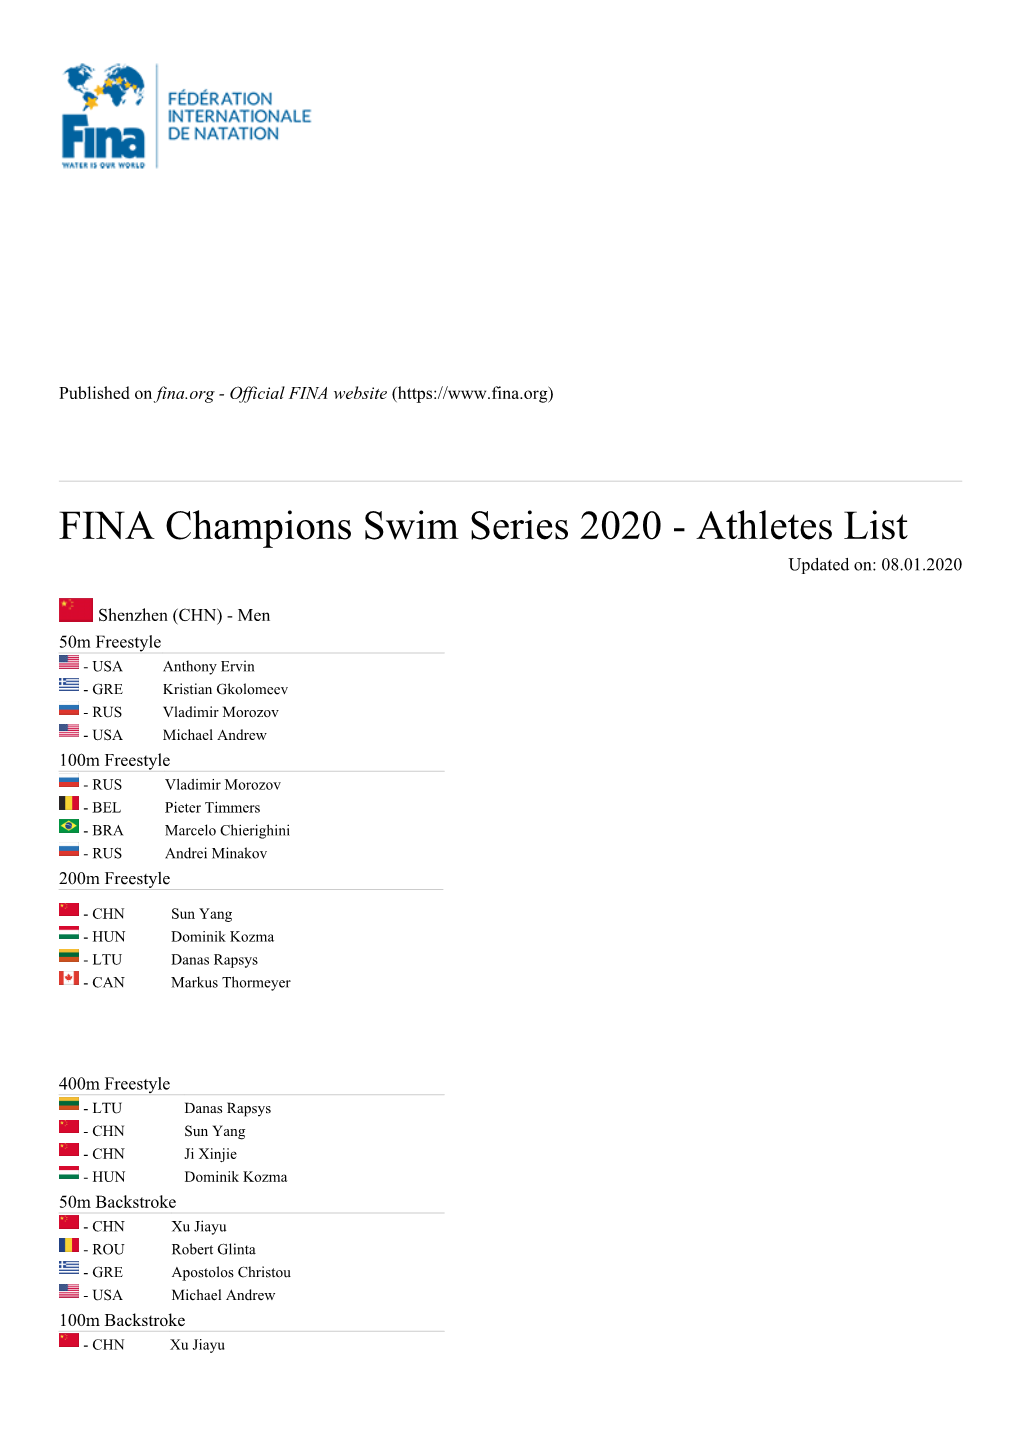 FINA Champions Swim Series 2020 - Athletes List Updated On: 08.01.2020